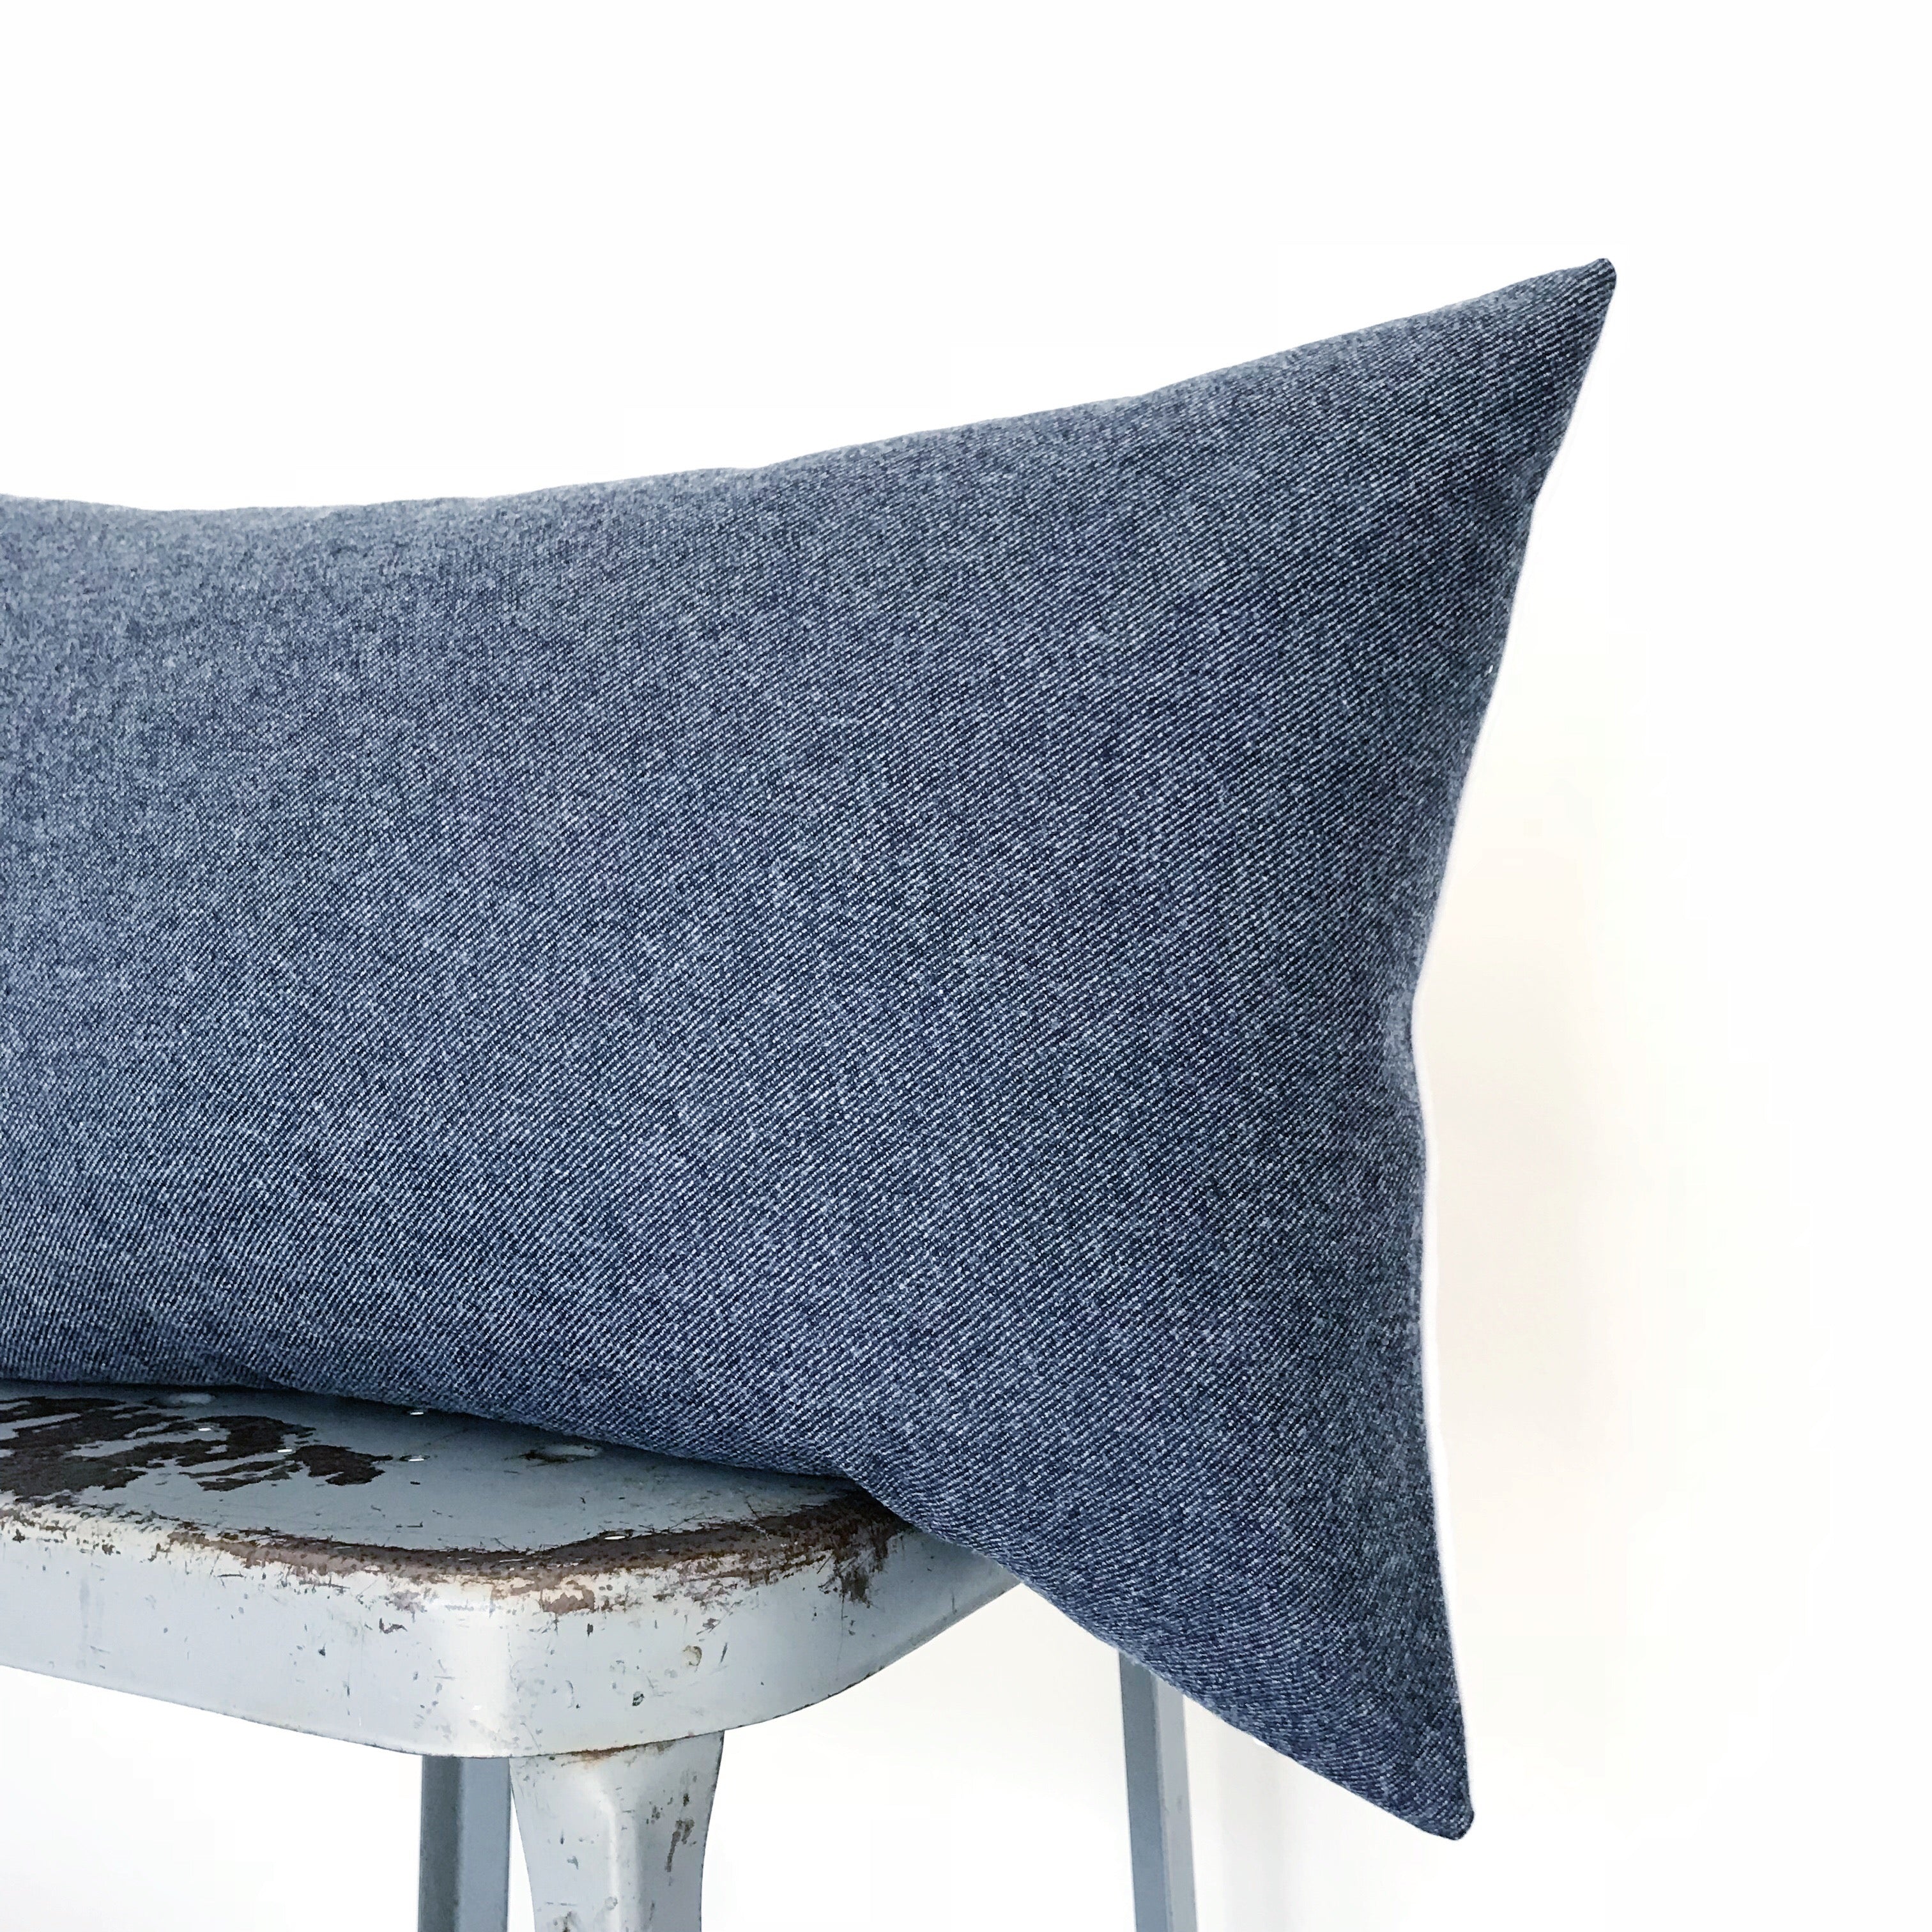 Northwest Pillow Cover - Heathered Blue (lumbar)